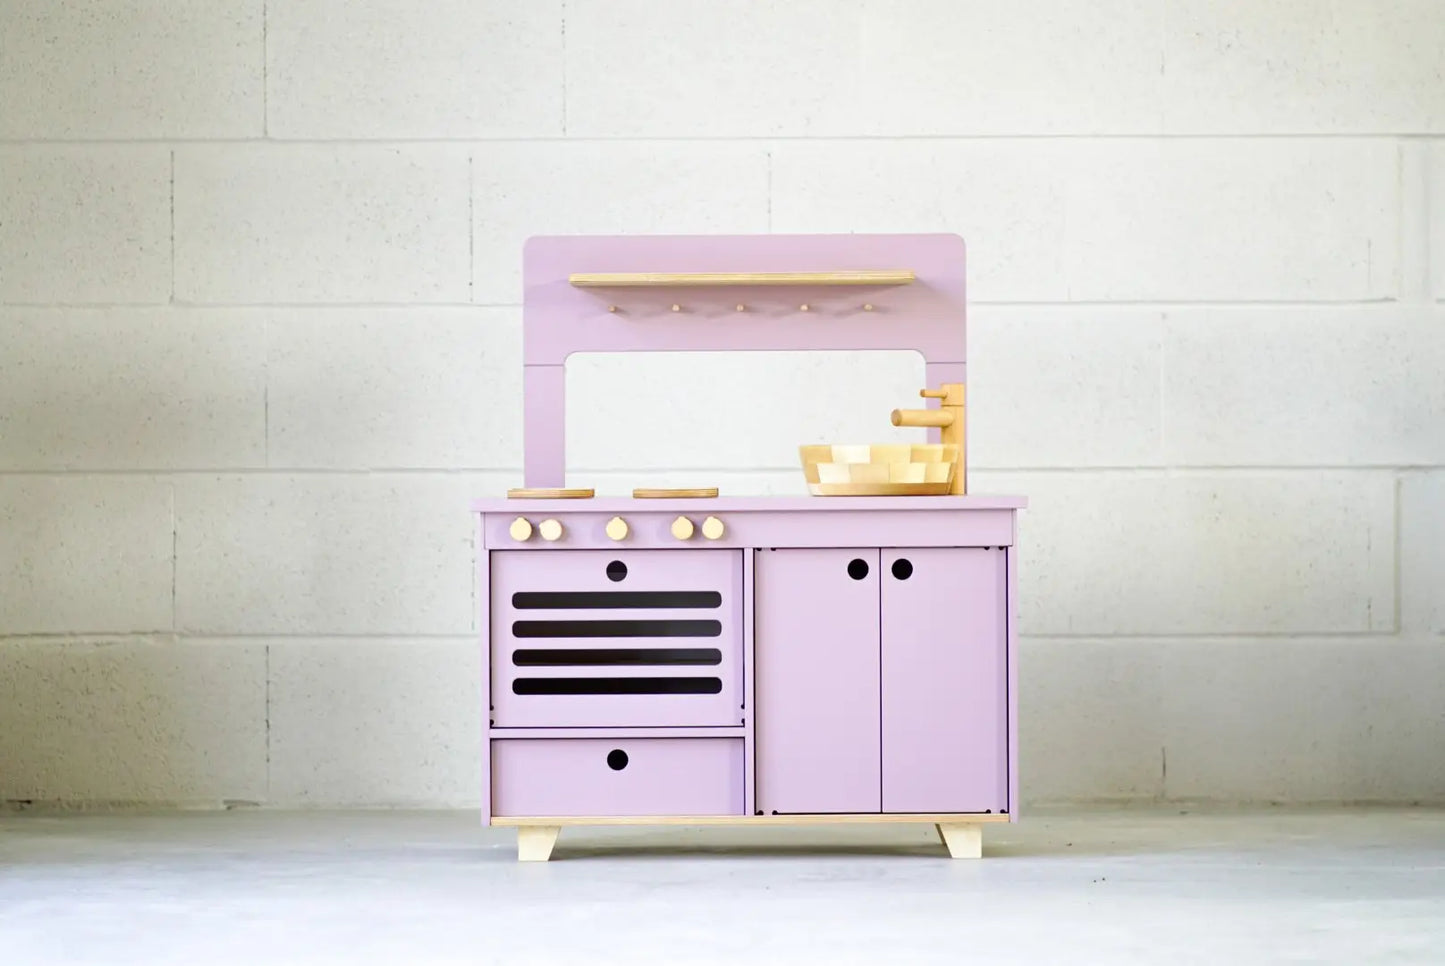 ZOE Lilac Wooden Play Kitchen + MIDMINI Plywood Tea Set for FREE